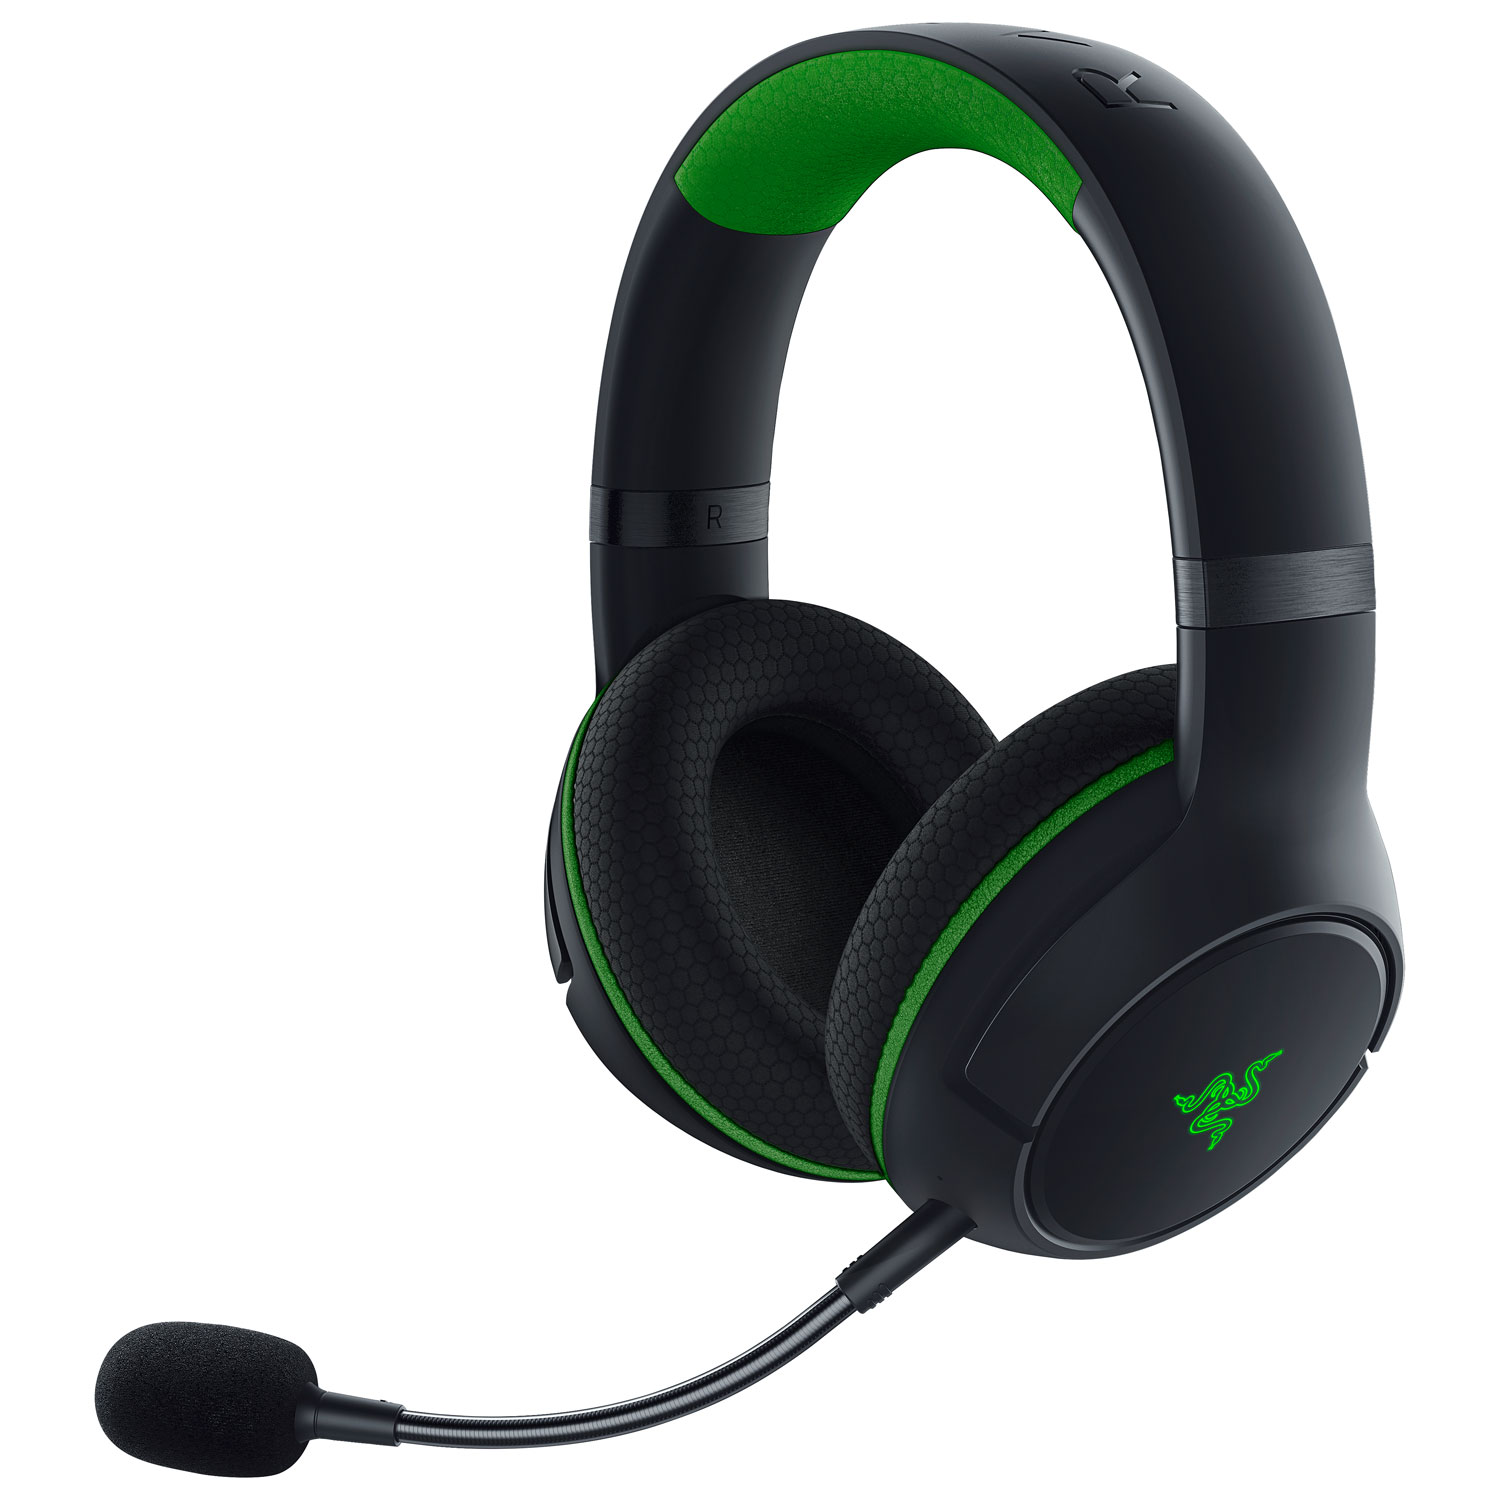 Razer Kaira Pro Wireless Gaming Headset for Xbox Series S/X and Mobile Devices - Black